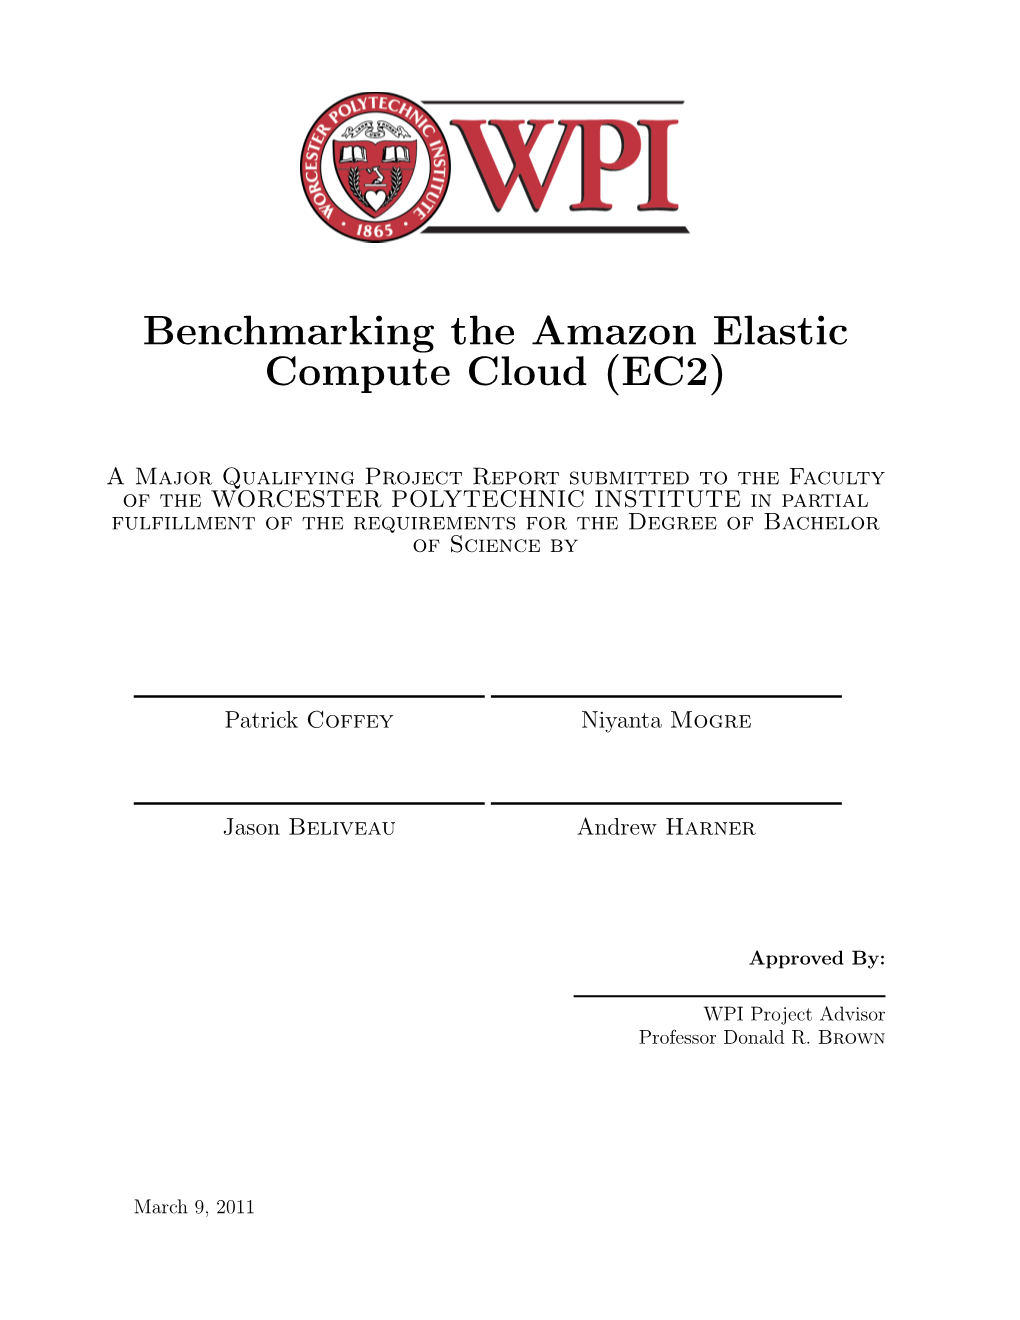 Benchmarking the Amazon Elastic Compute Cloud (EC2)